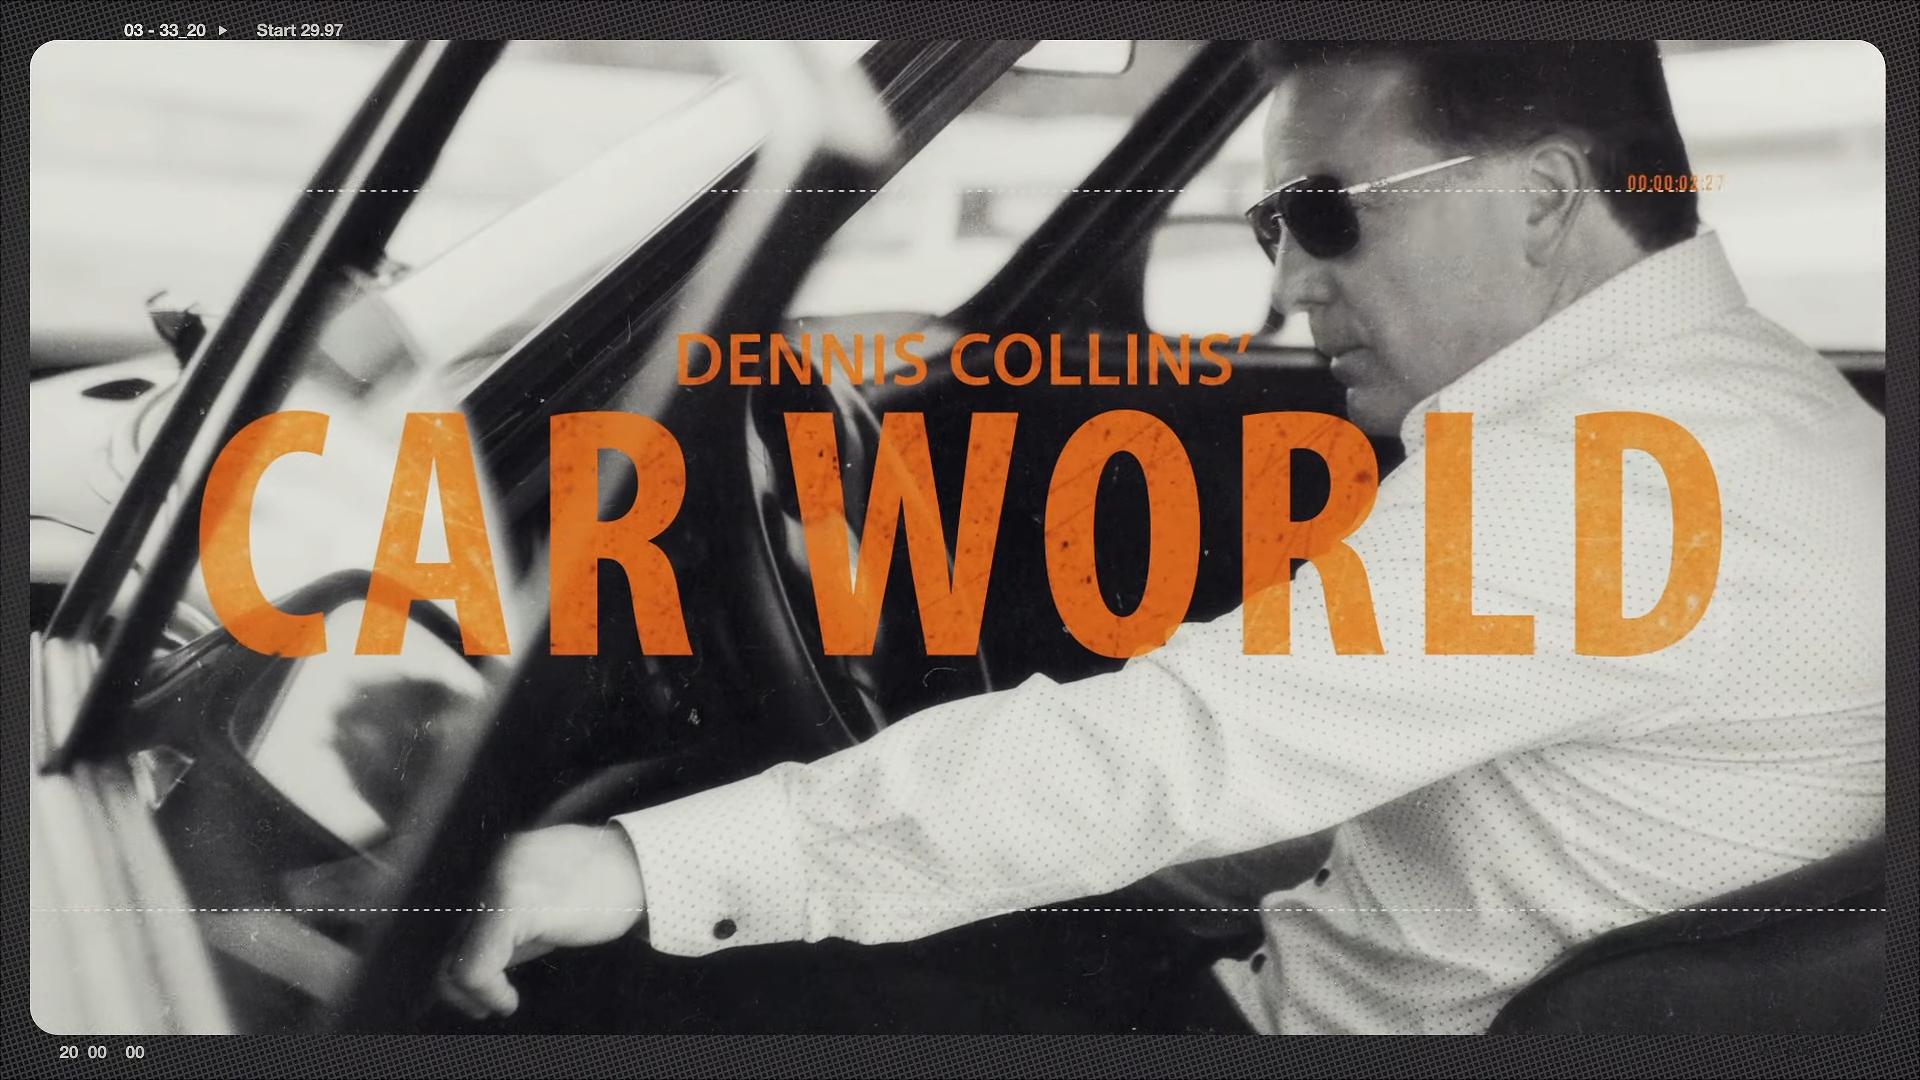 Dennis collins cars